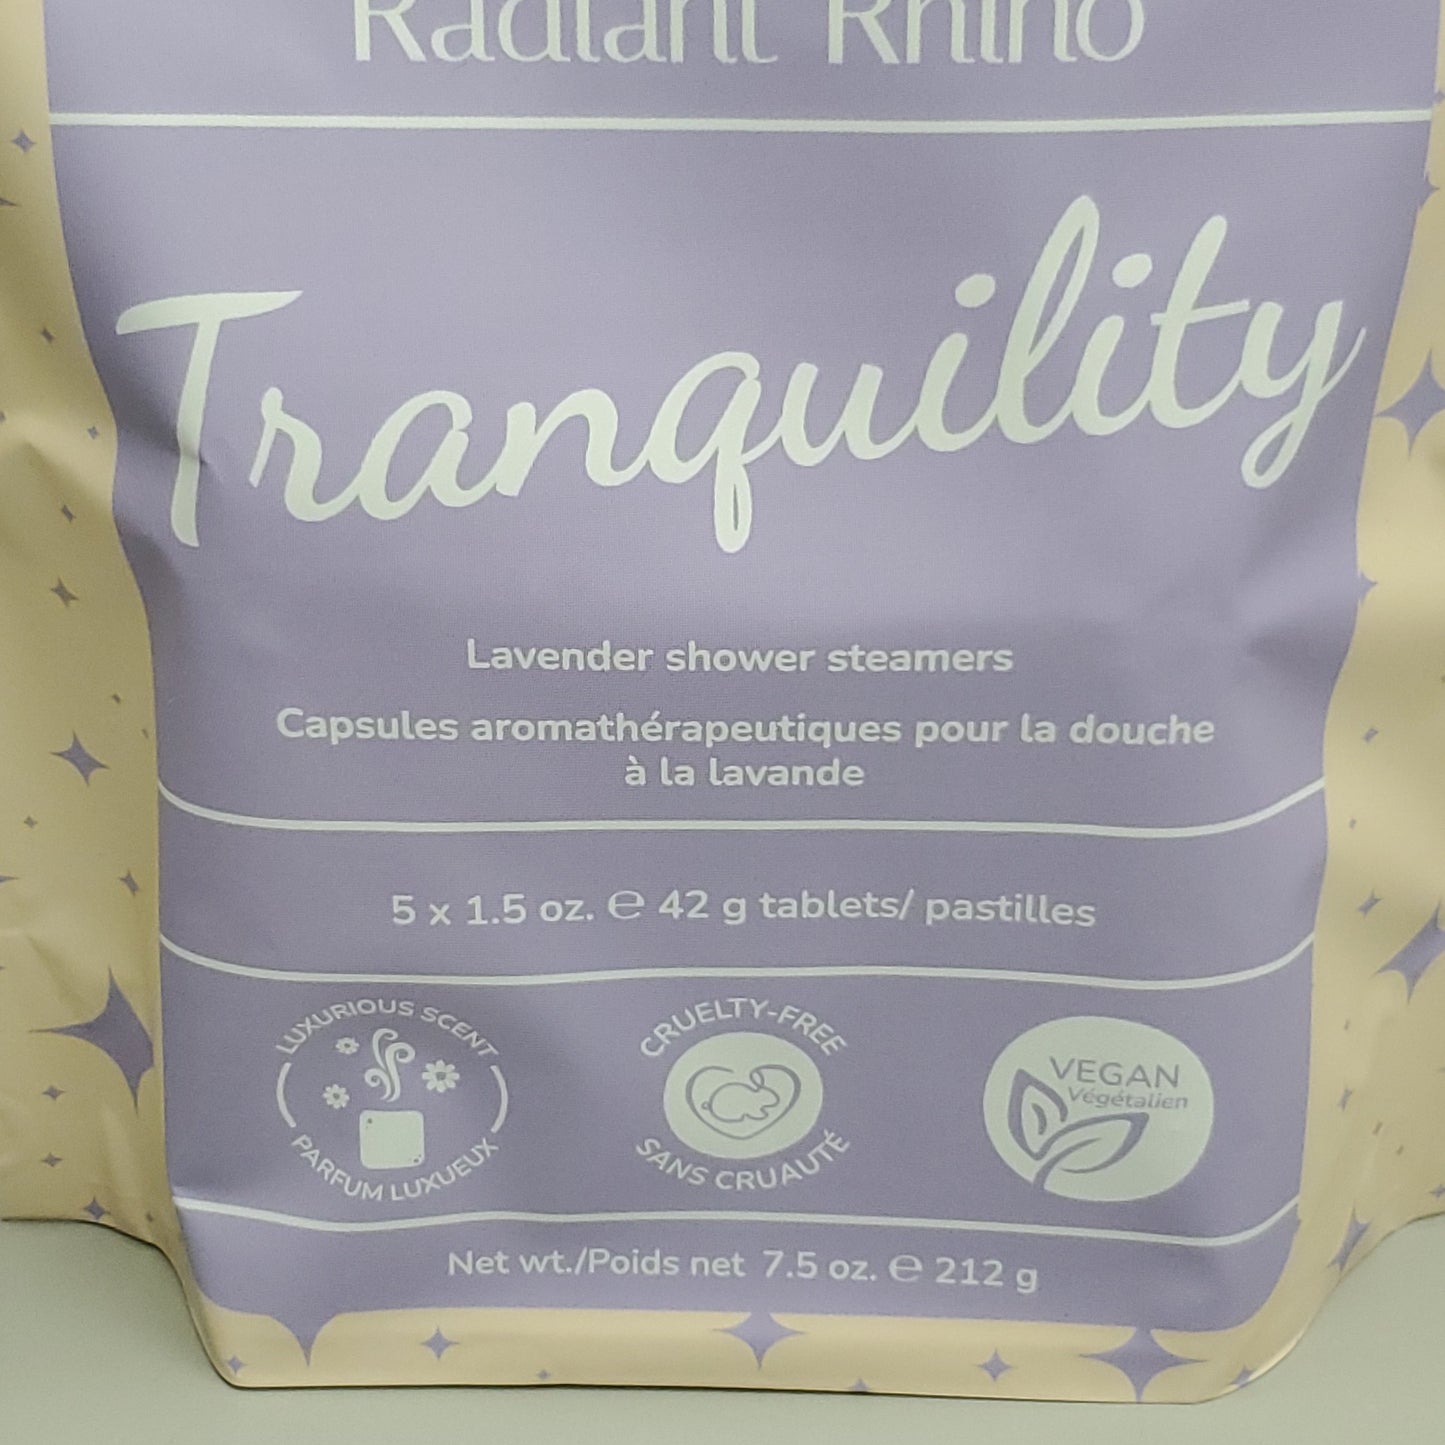 THE RADIANT RHINO Tranquility Lavender Shower Steamers 6-PK! 5x1.5oz Tablets 7.5oz (New)